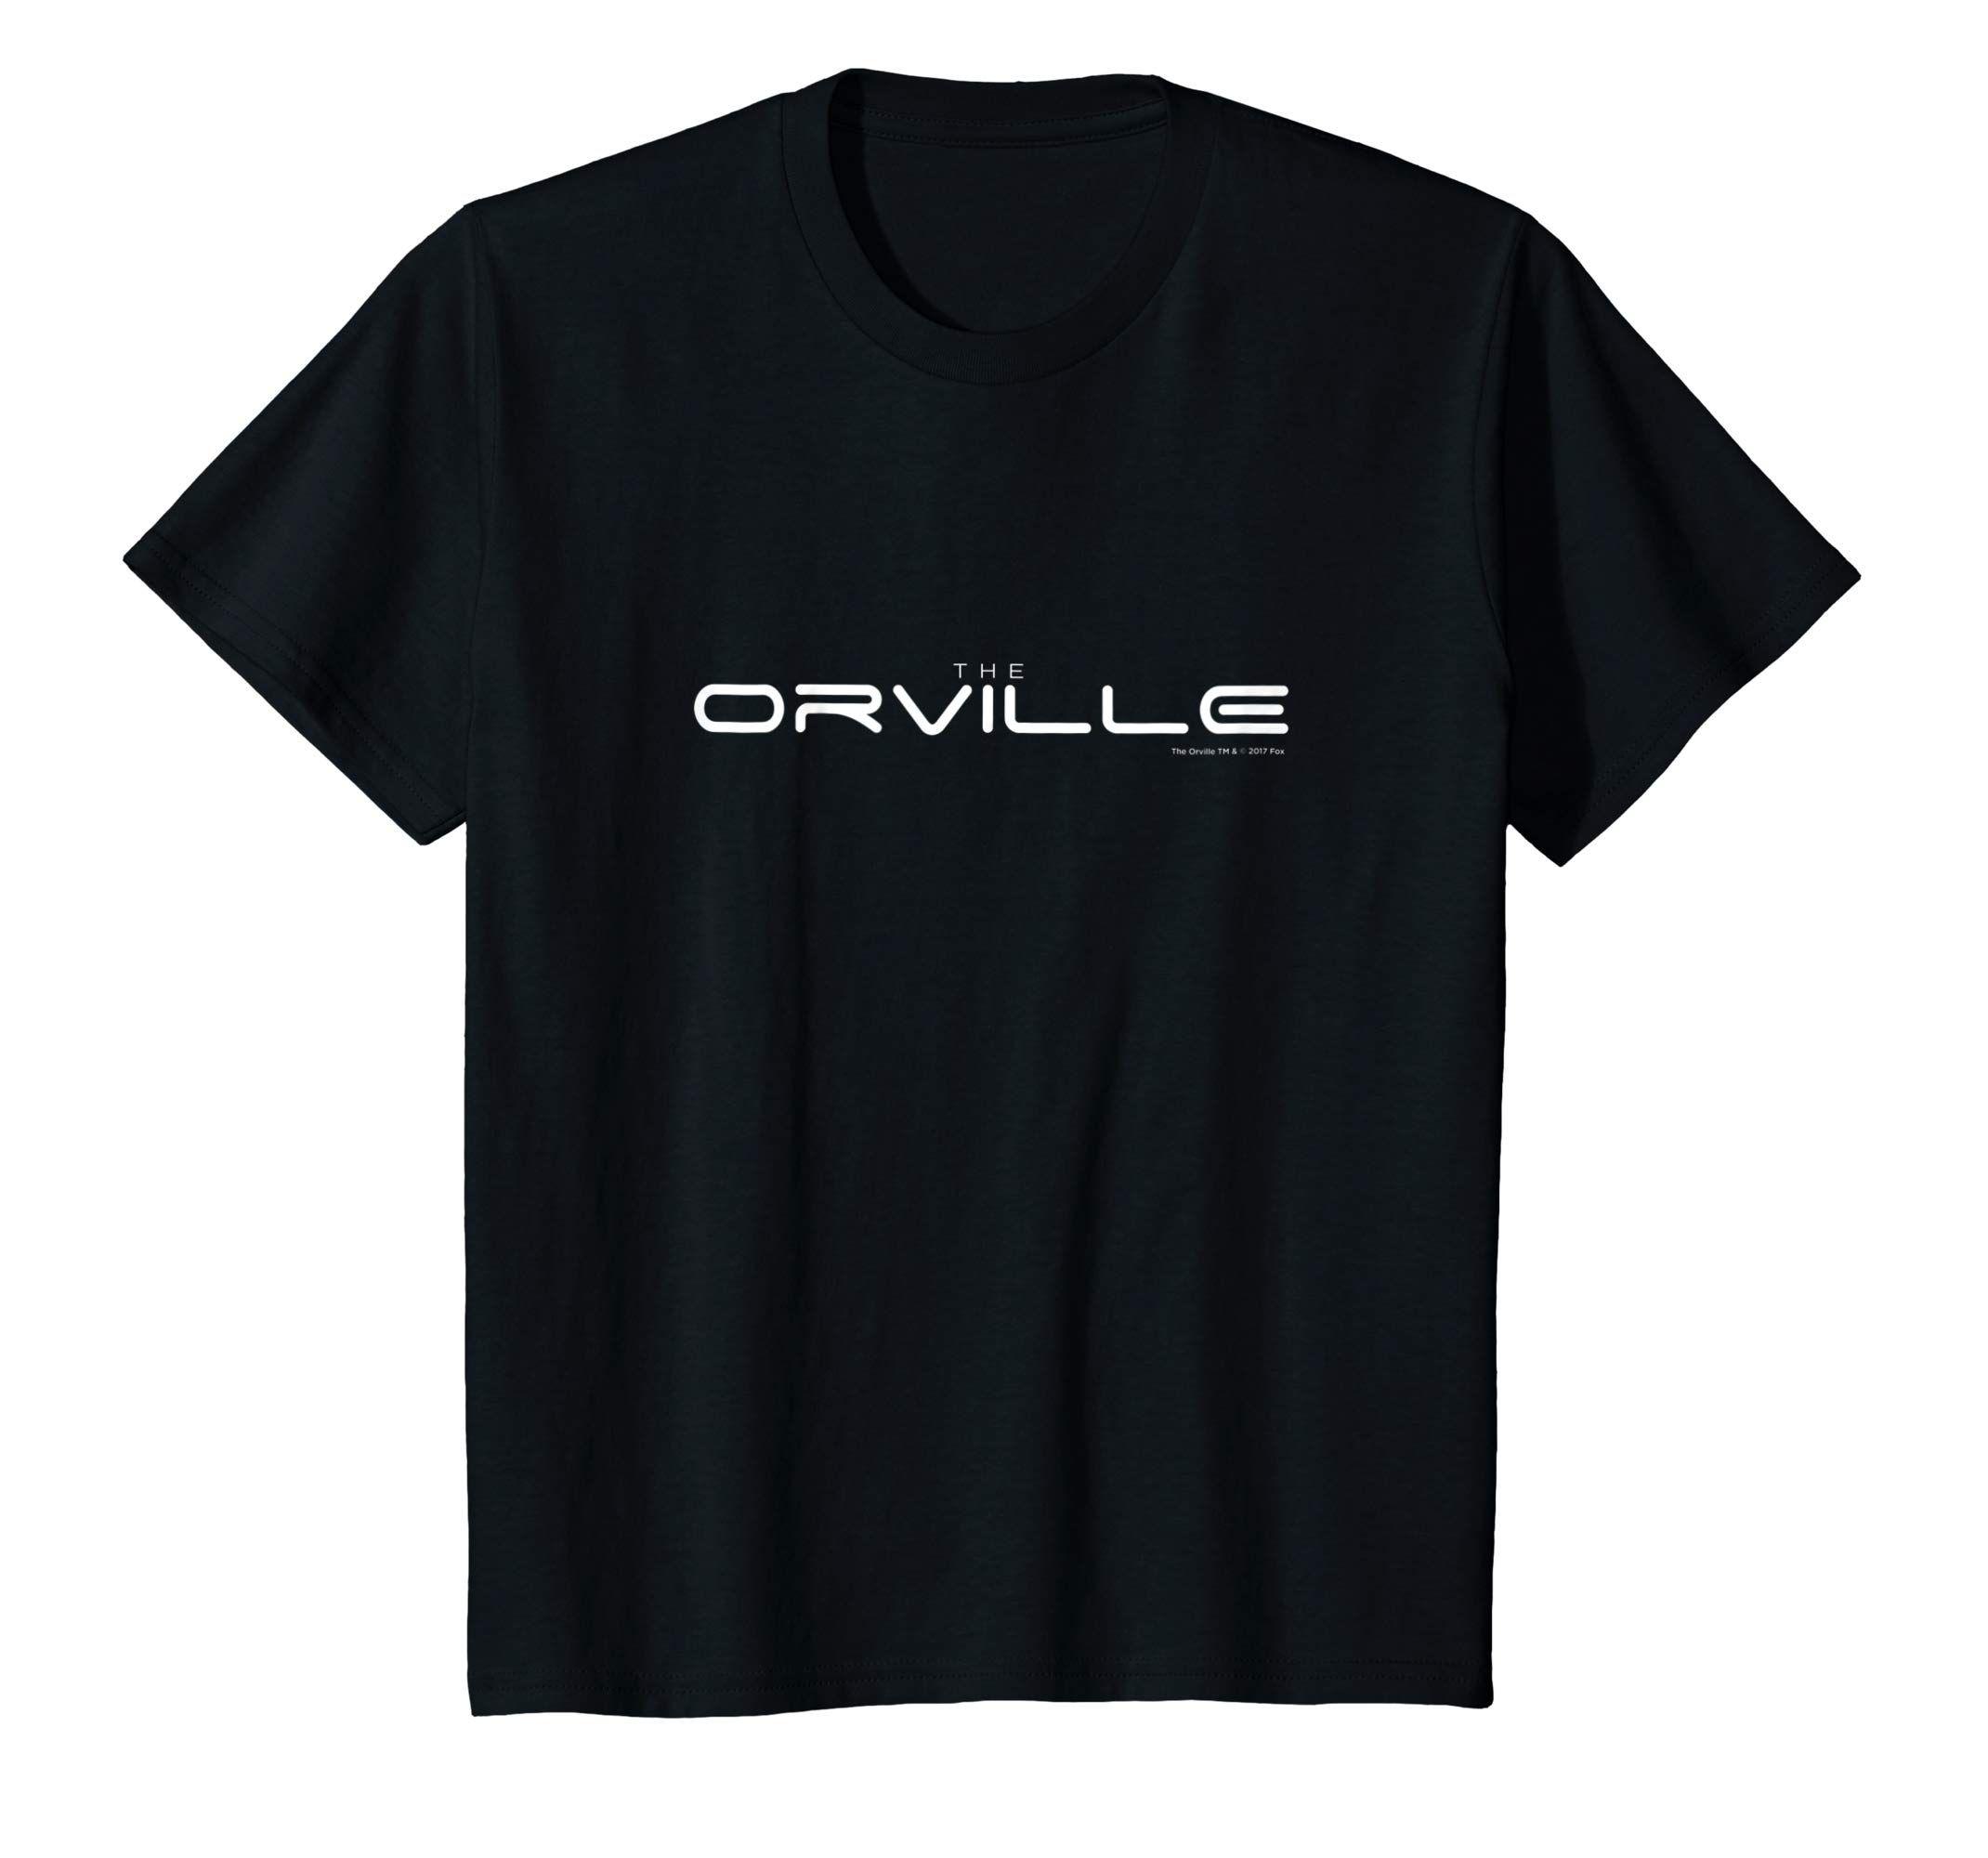 Orville Logo - Amazon.com: The Orville Logo T Shirt: Clothing